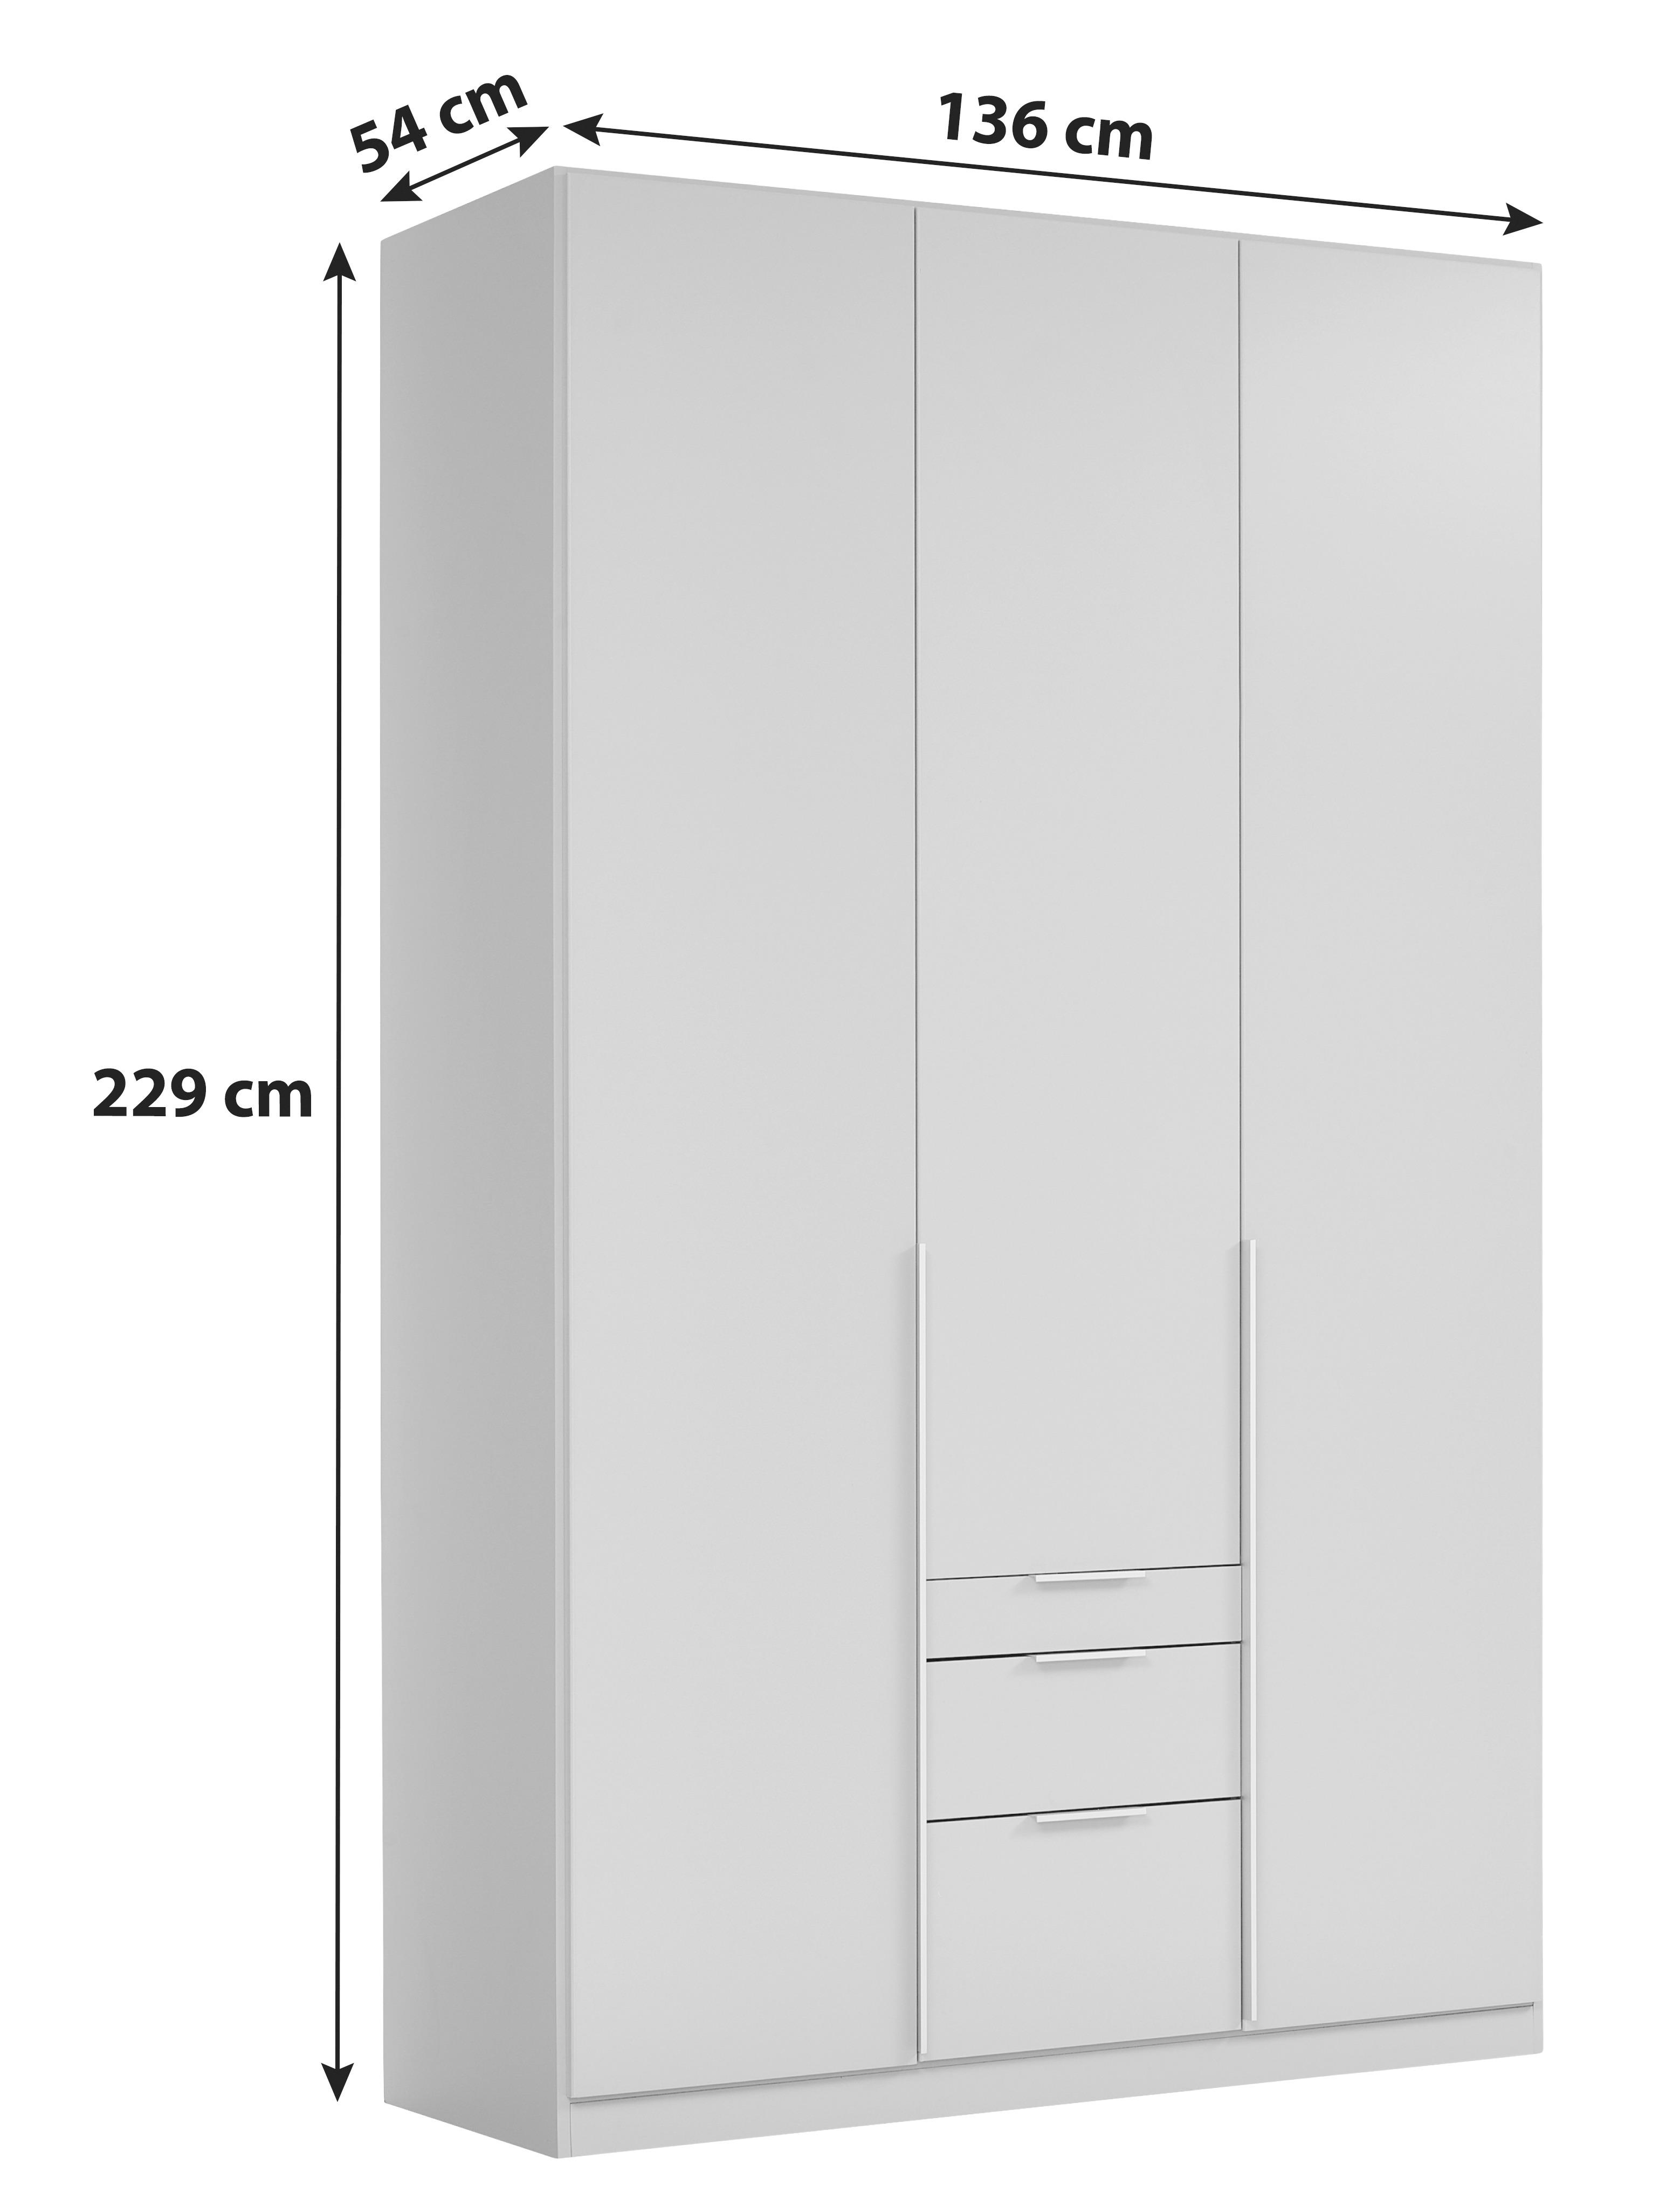 DREHTÜRENSCHRANK 3-türig Grau  - Alufarben/Grau, MODERN, Holzwerkstoff (136/229/54cm) - MID.YOU